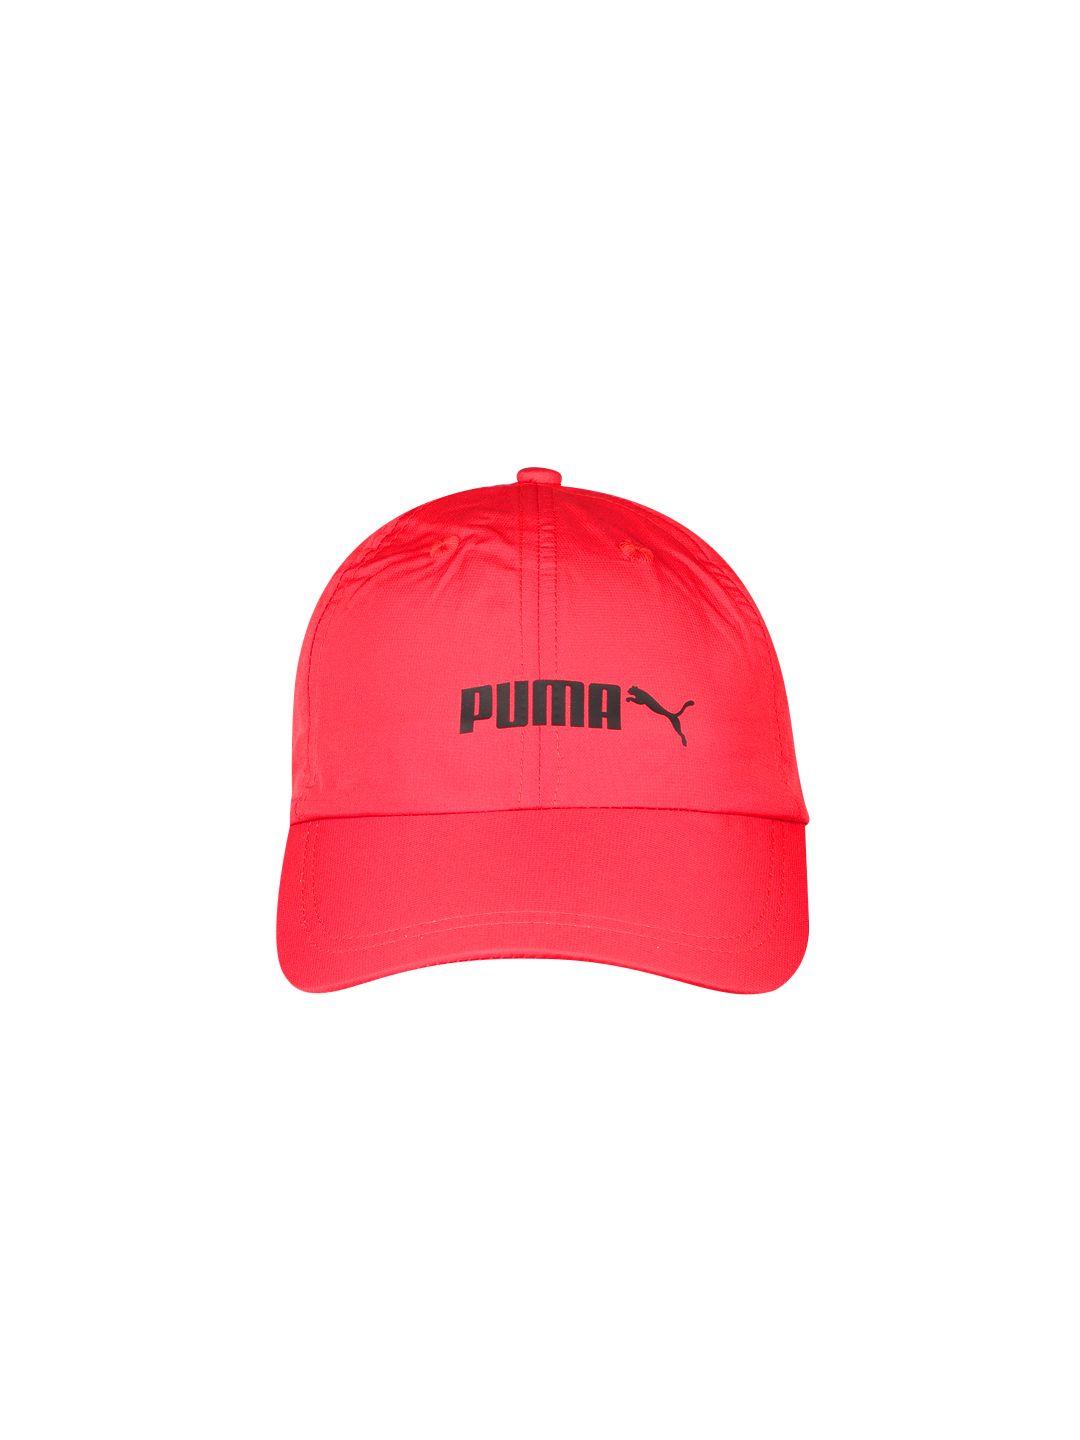 puma men performance printed baseball cap